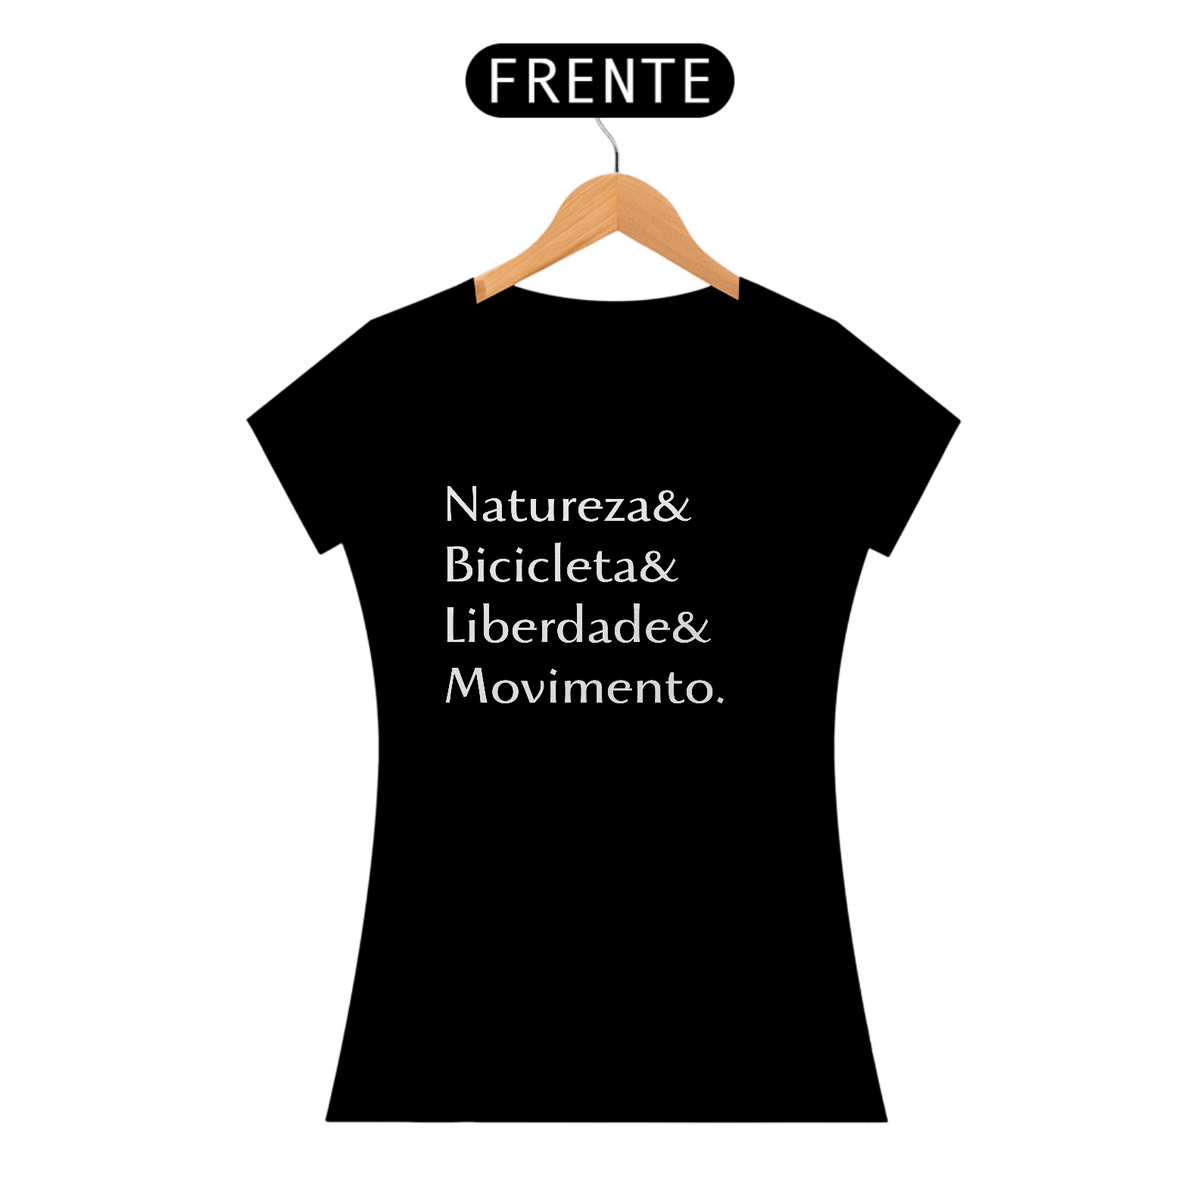 Nome do produto: Camiseta Natureza, Bicilceta, Liberdade e Movimento